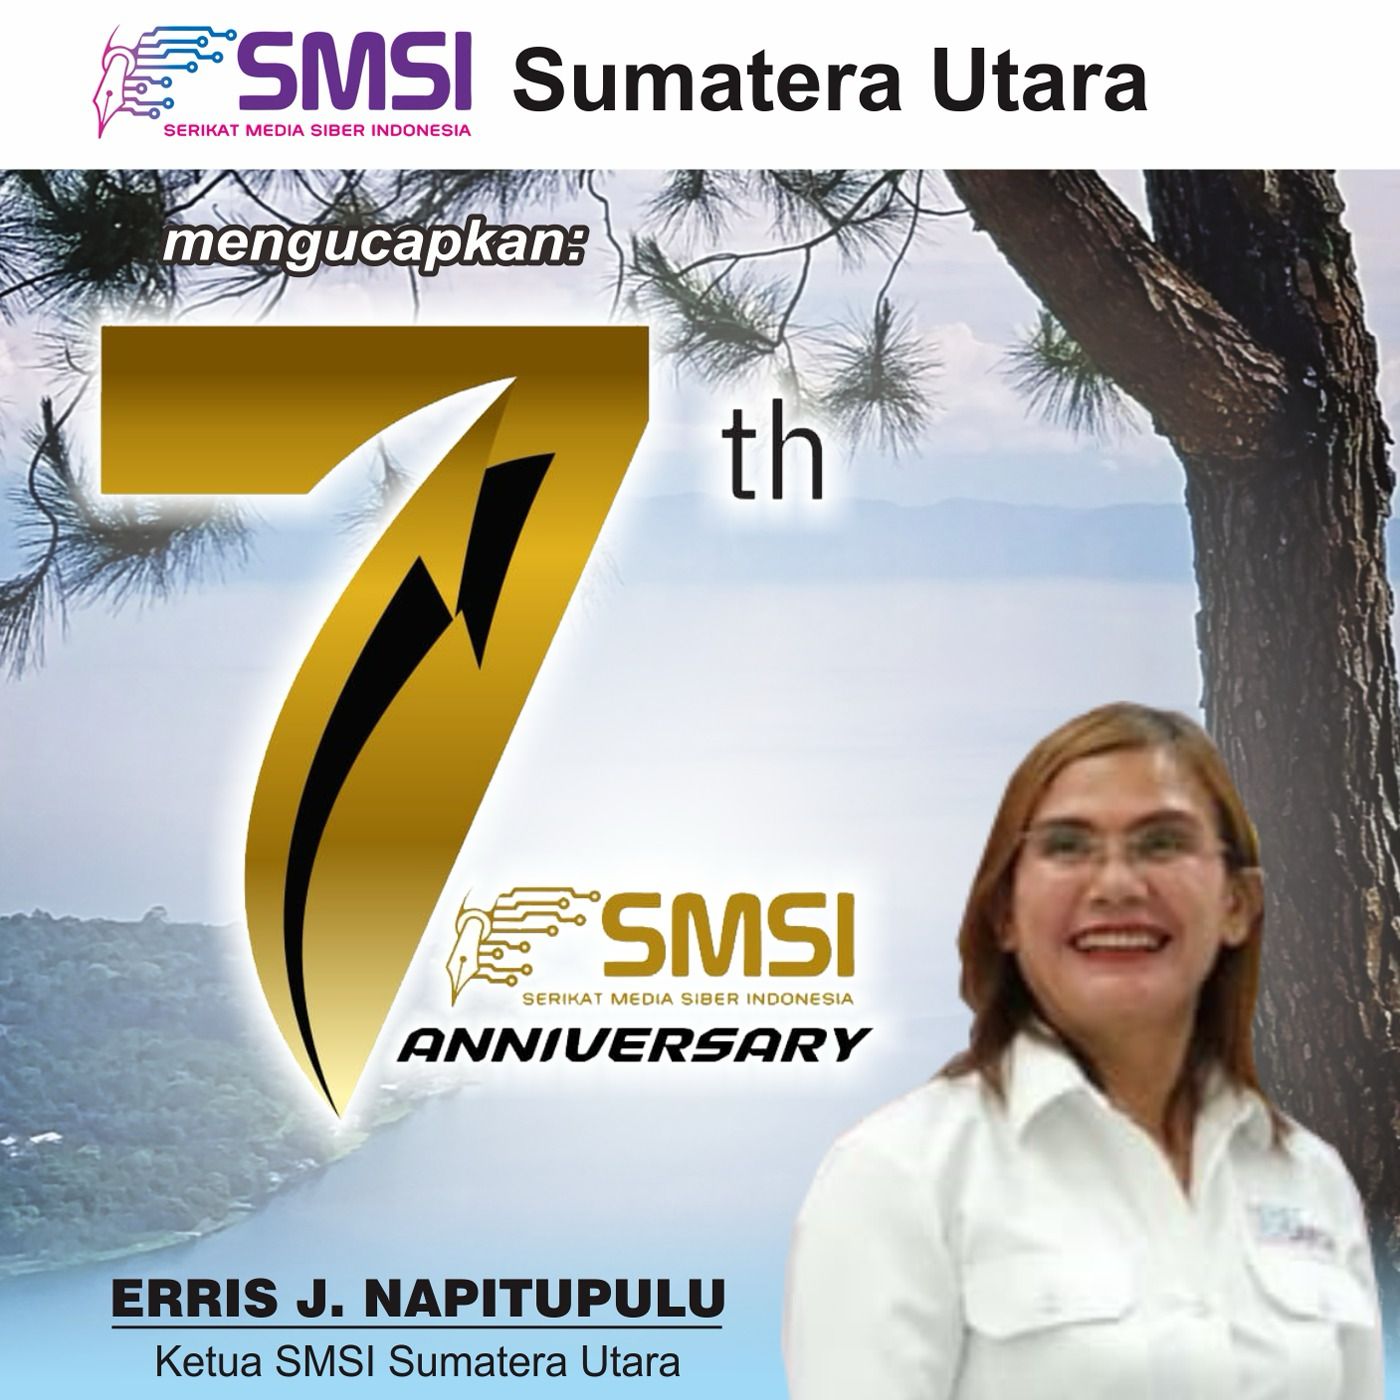 Ketua SMSI Sumut Erris J Napitupulu. fhoto : istimewa.